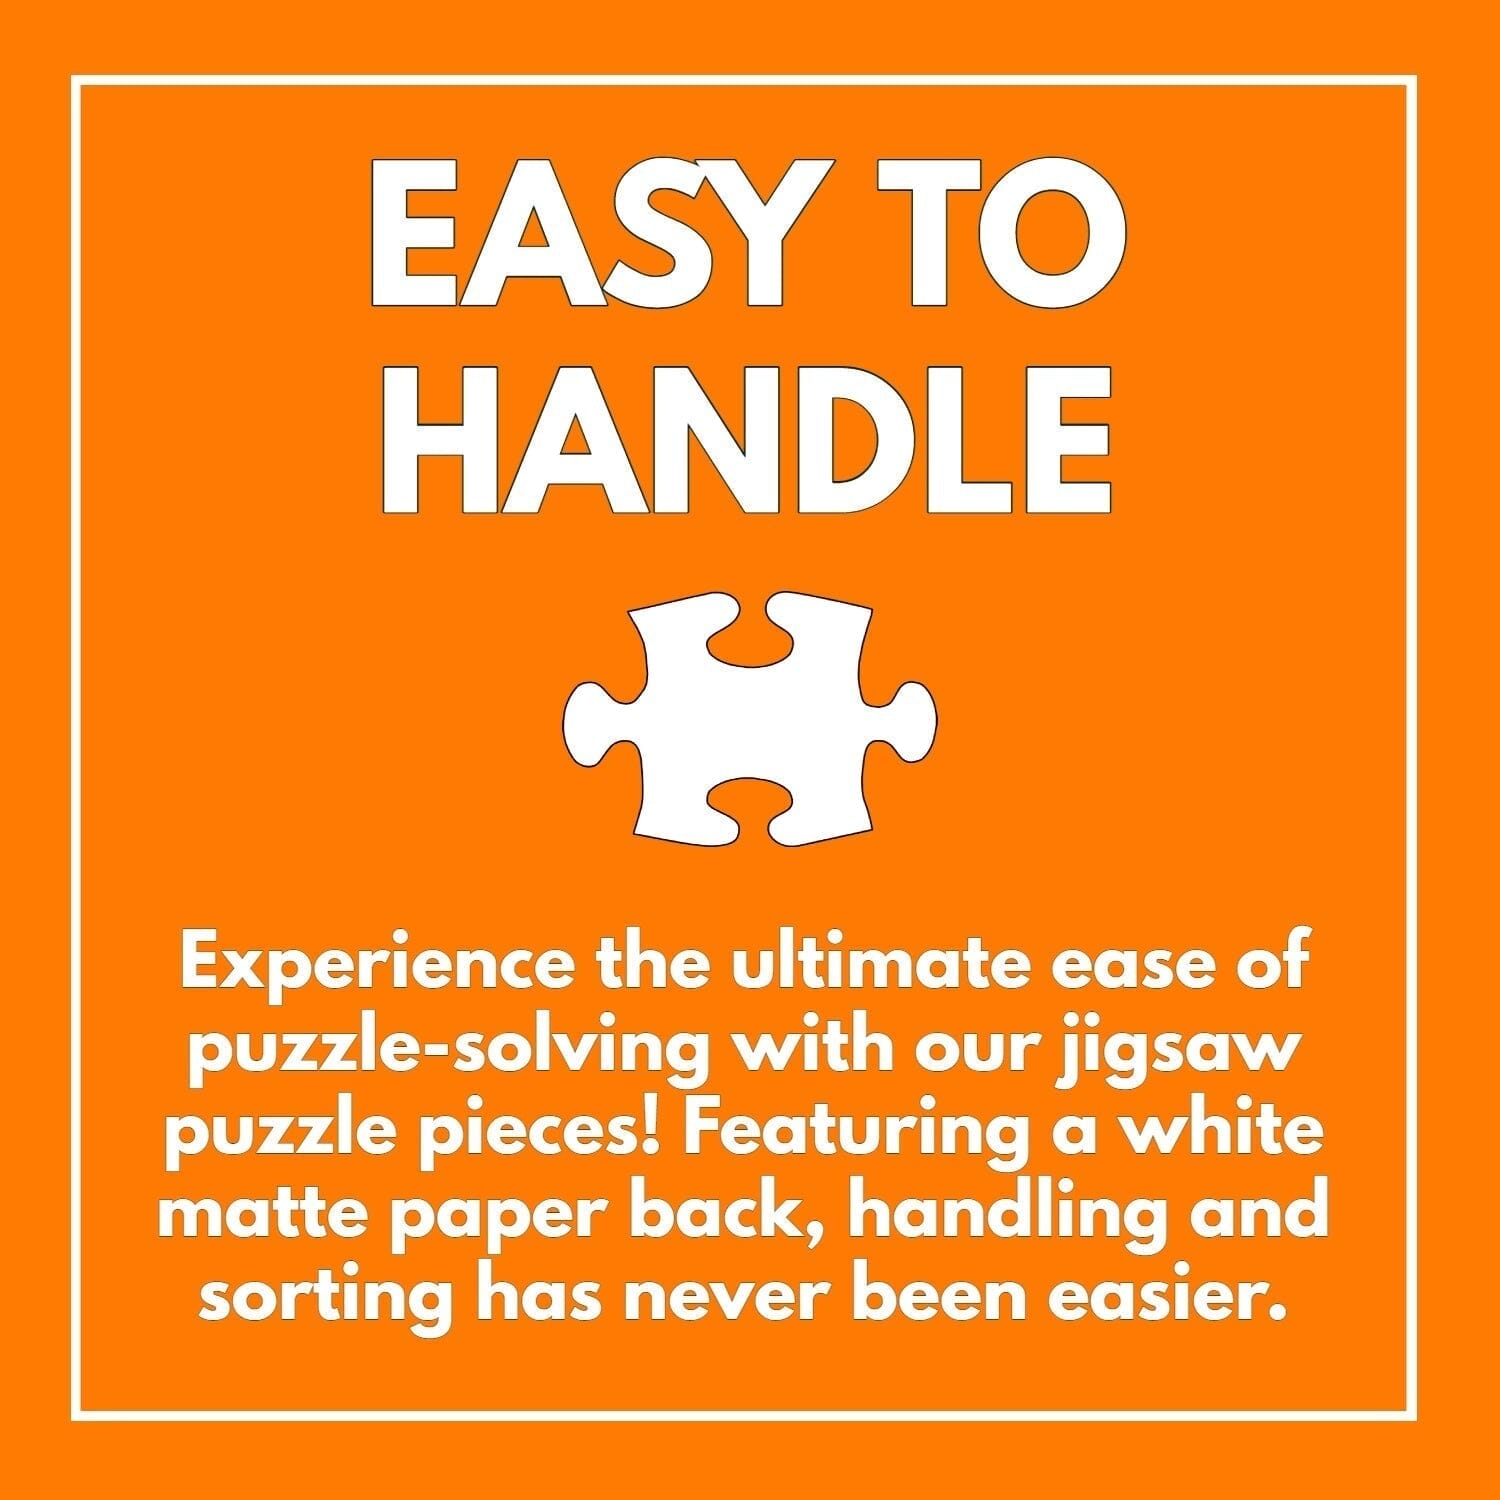 Macaron Palette Parade - 1000 Piece Jigsaw Puzzle Jigsaw Puzzles Cross & Glory